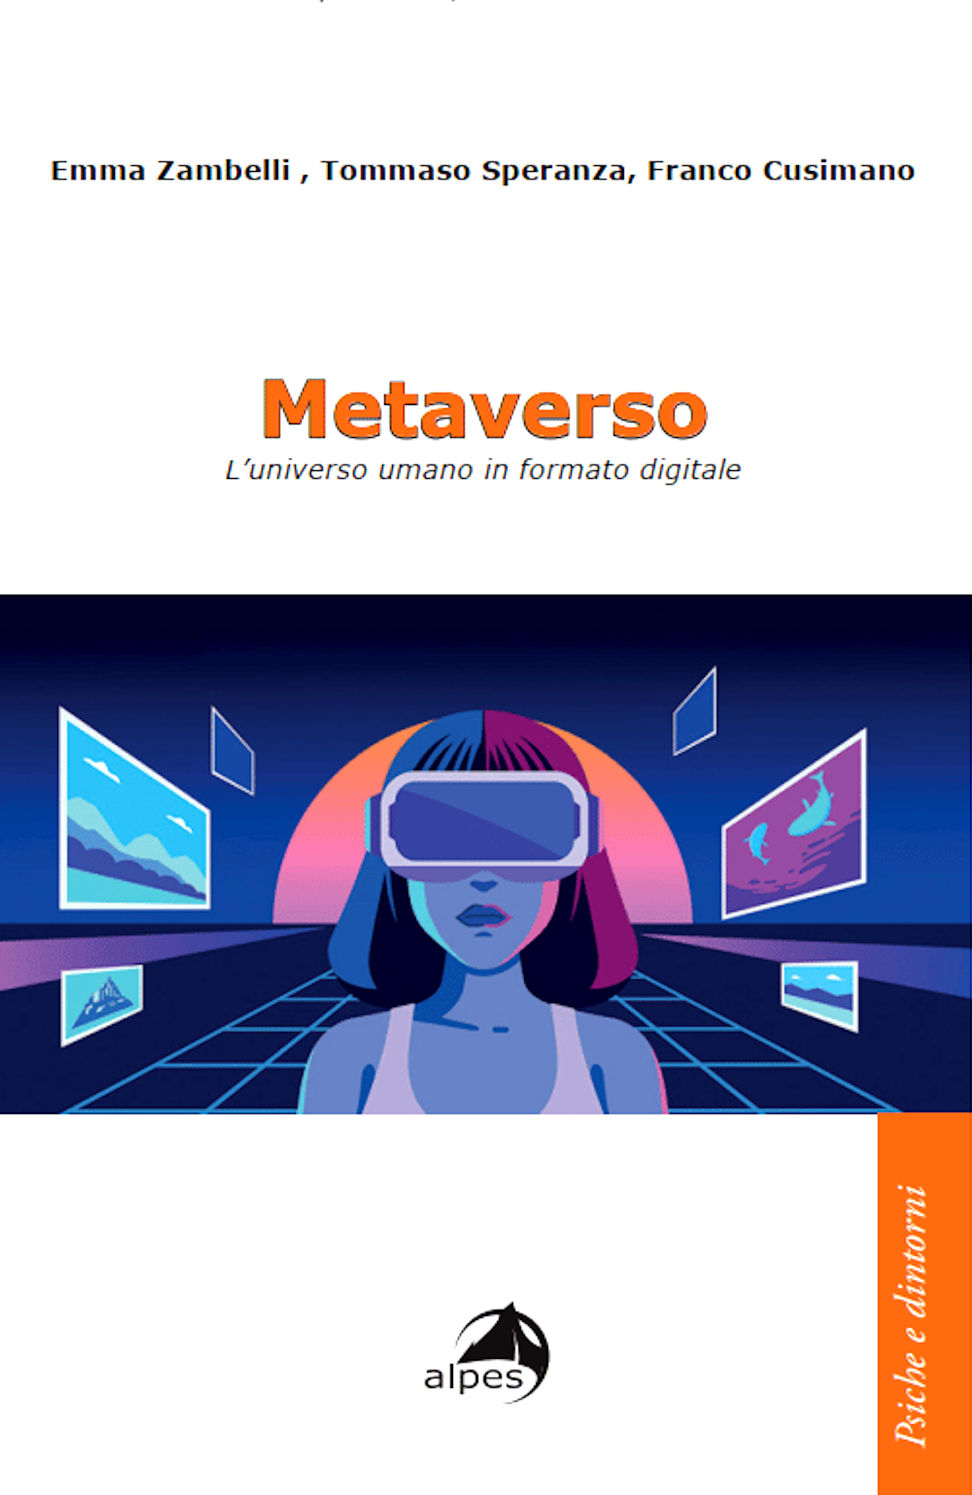 Metaverso: l’universo umano nel digitale